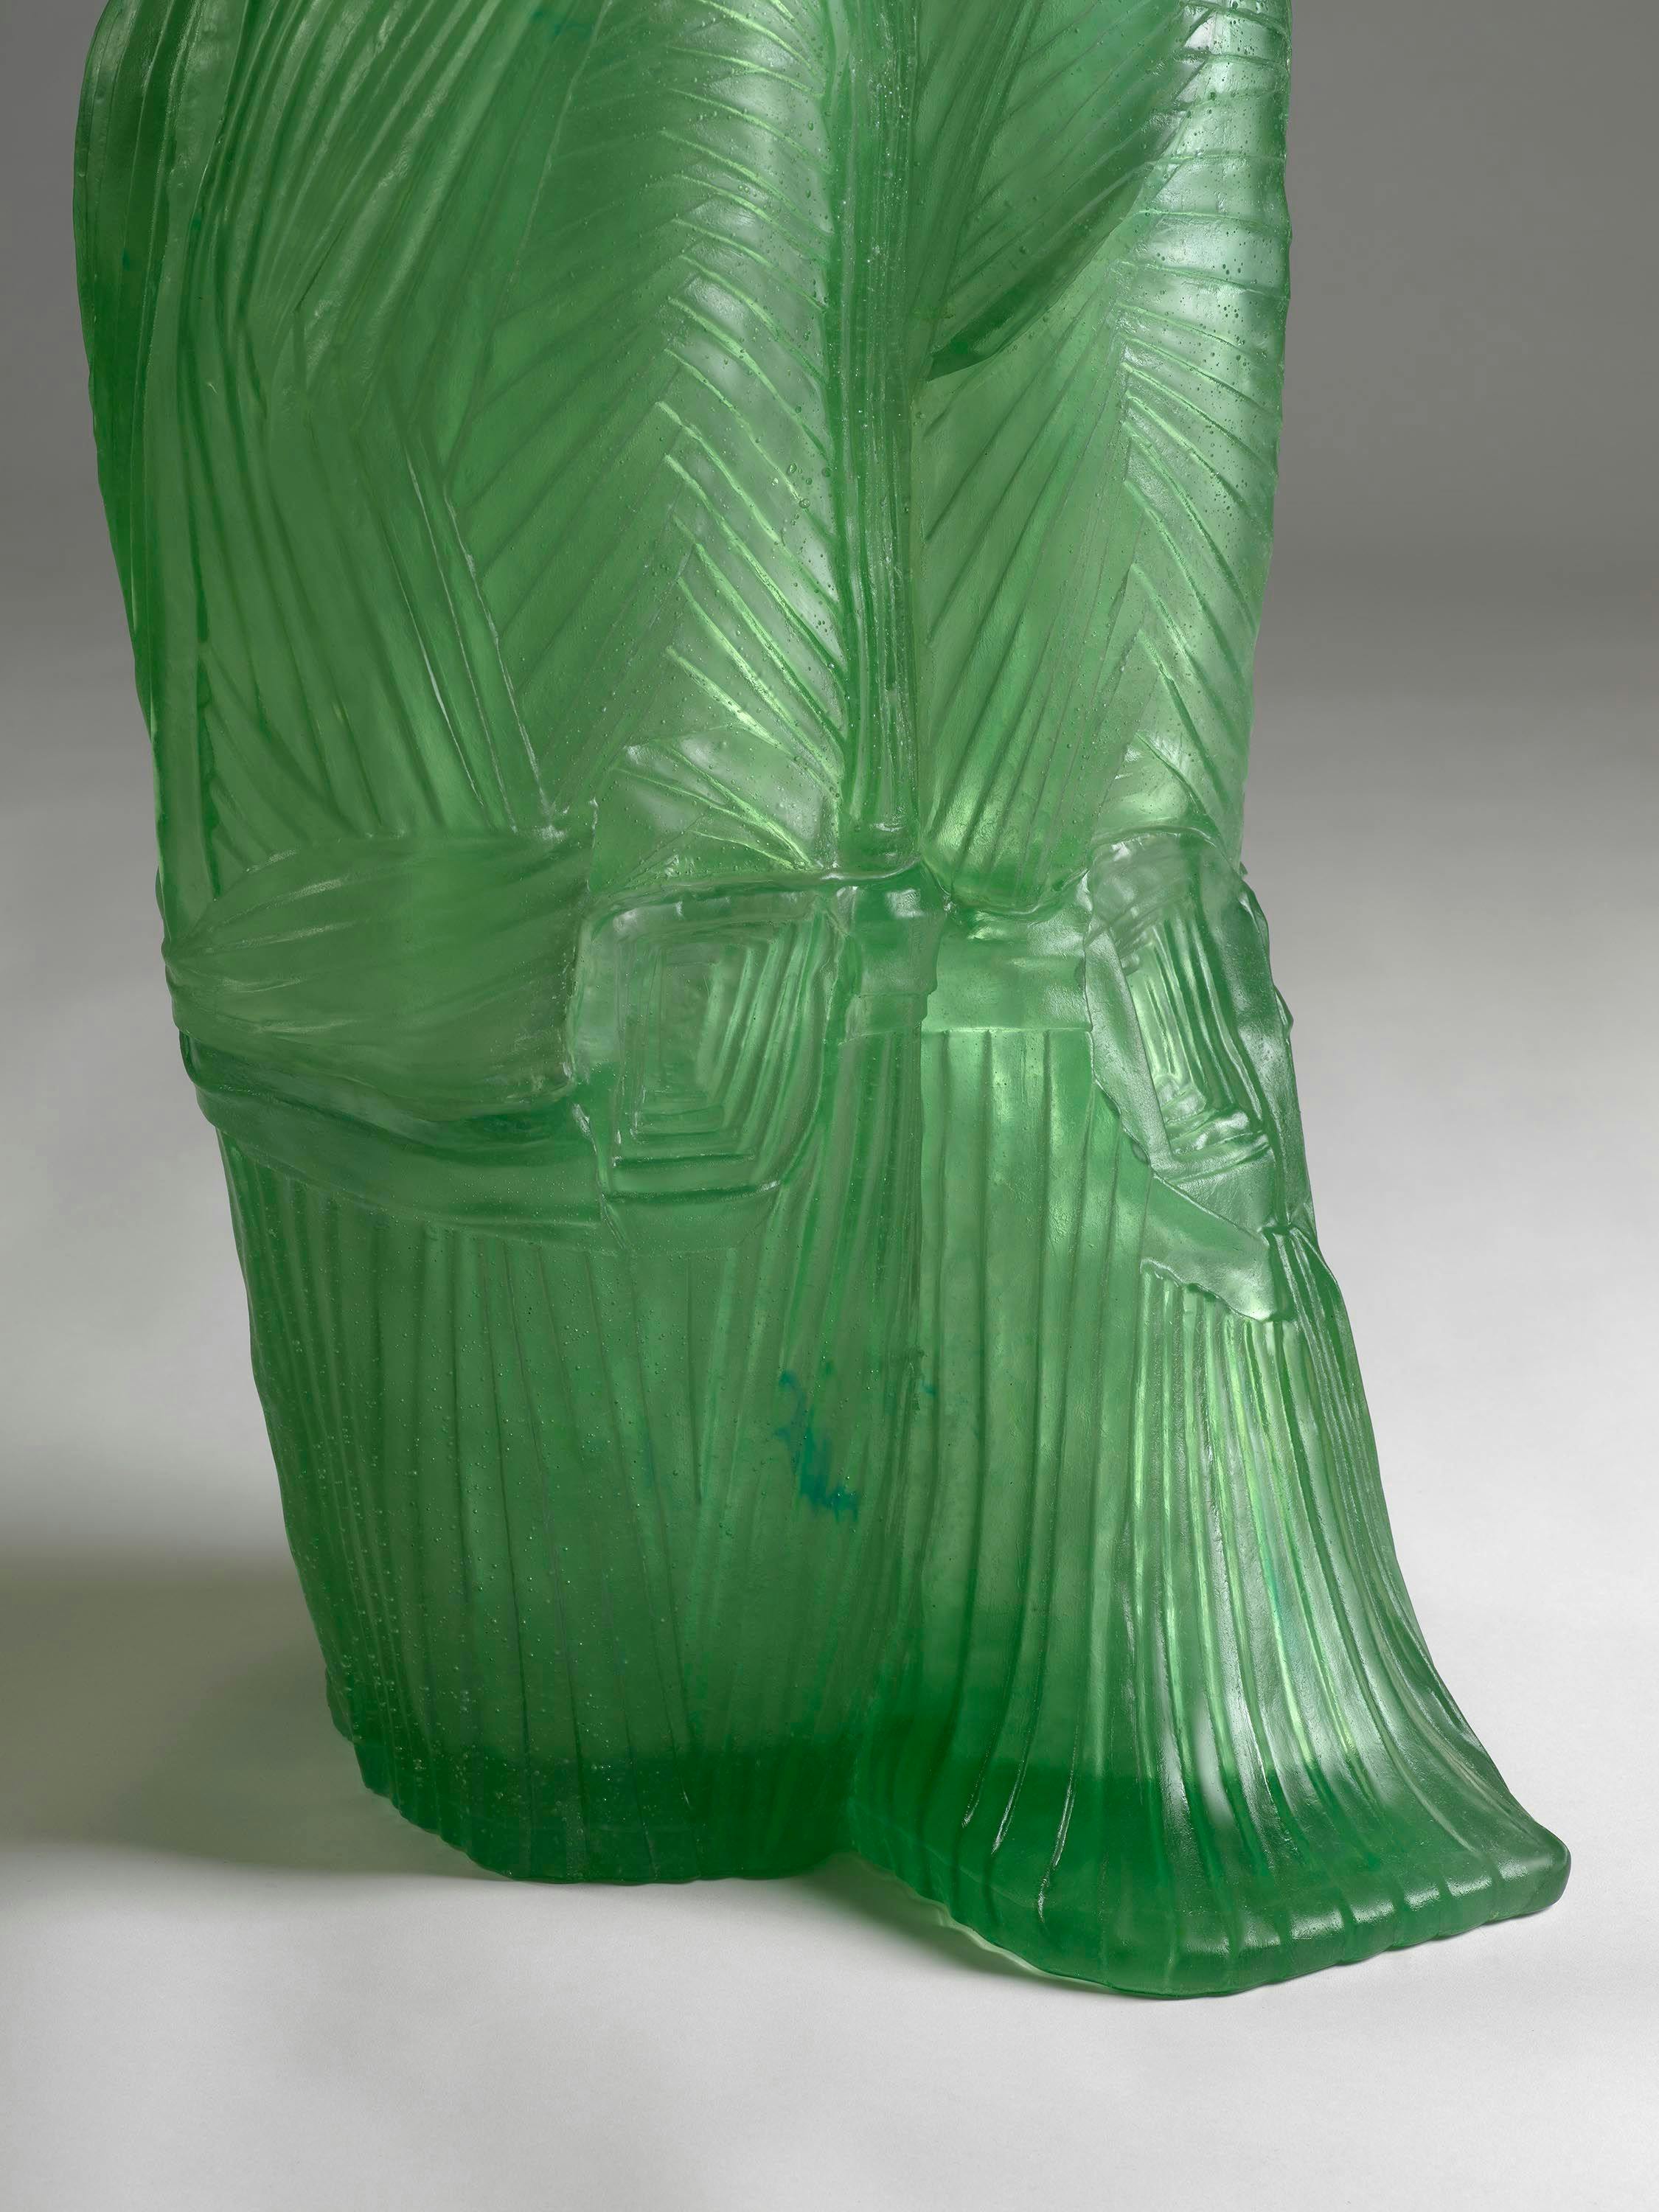 A sculpture by Andra Ursuta, titled Half-Drunk Mummy, dated 2020.